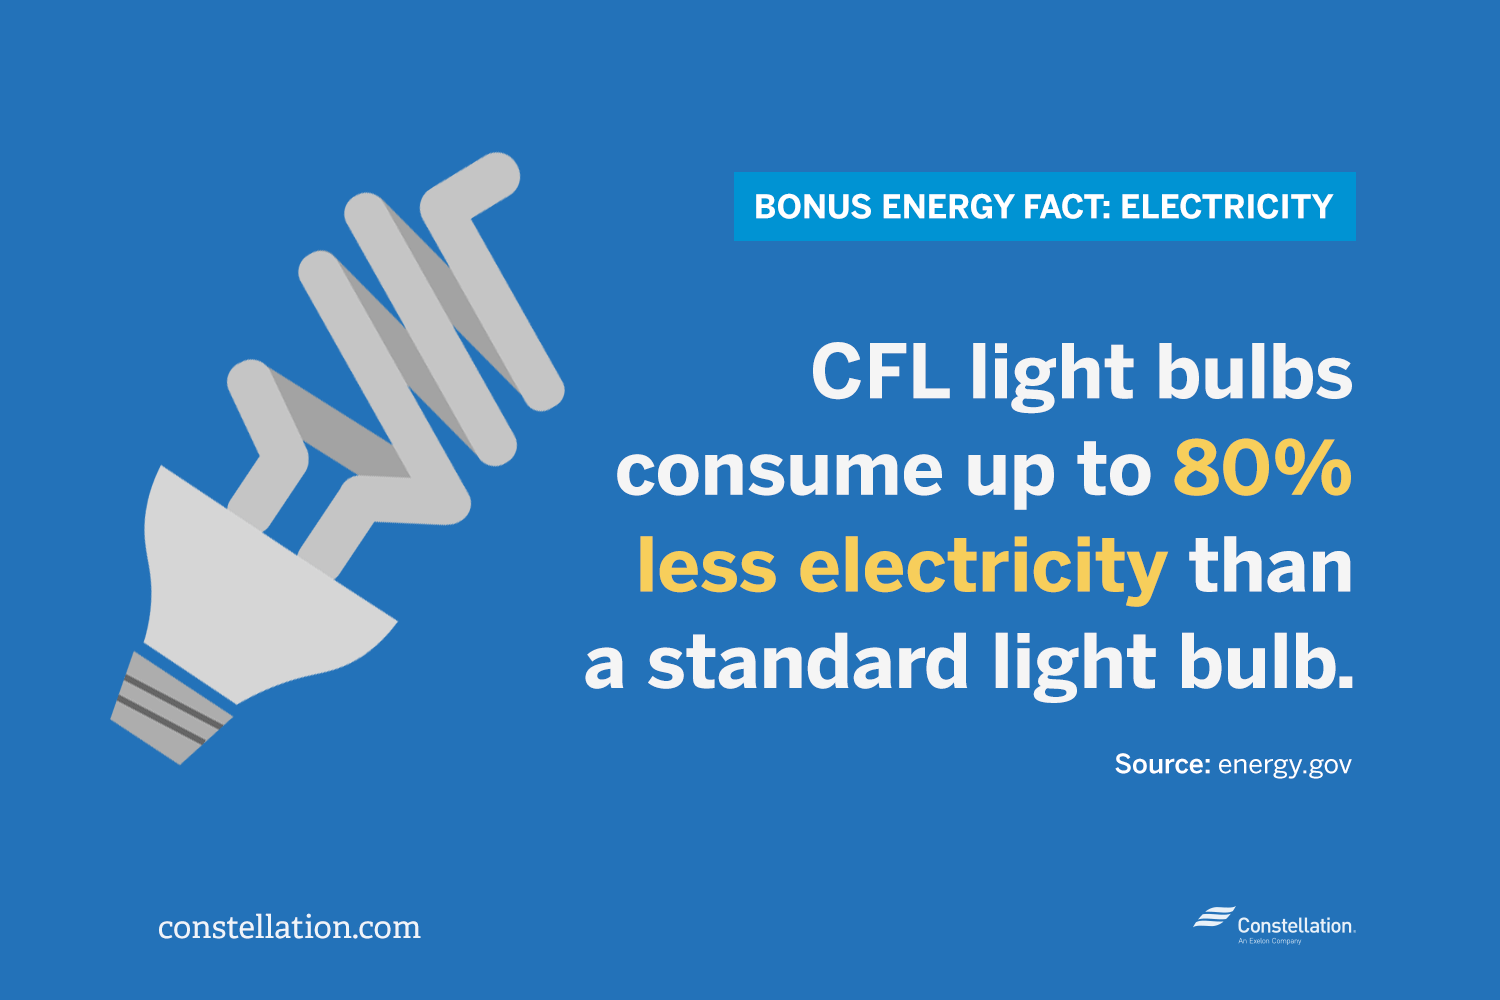 CFL bulbs consume 80% less electricity than standard bulbs